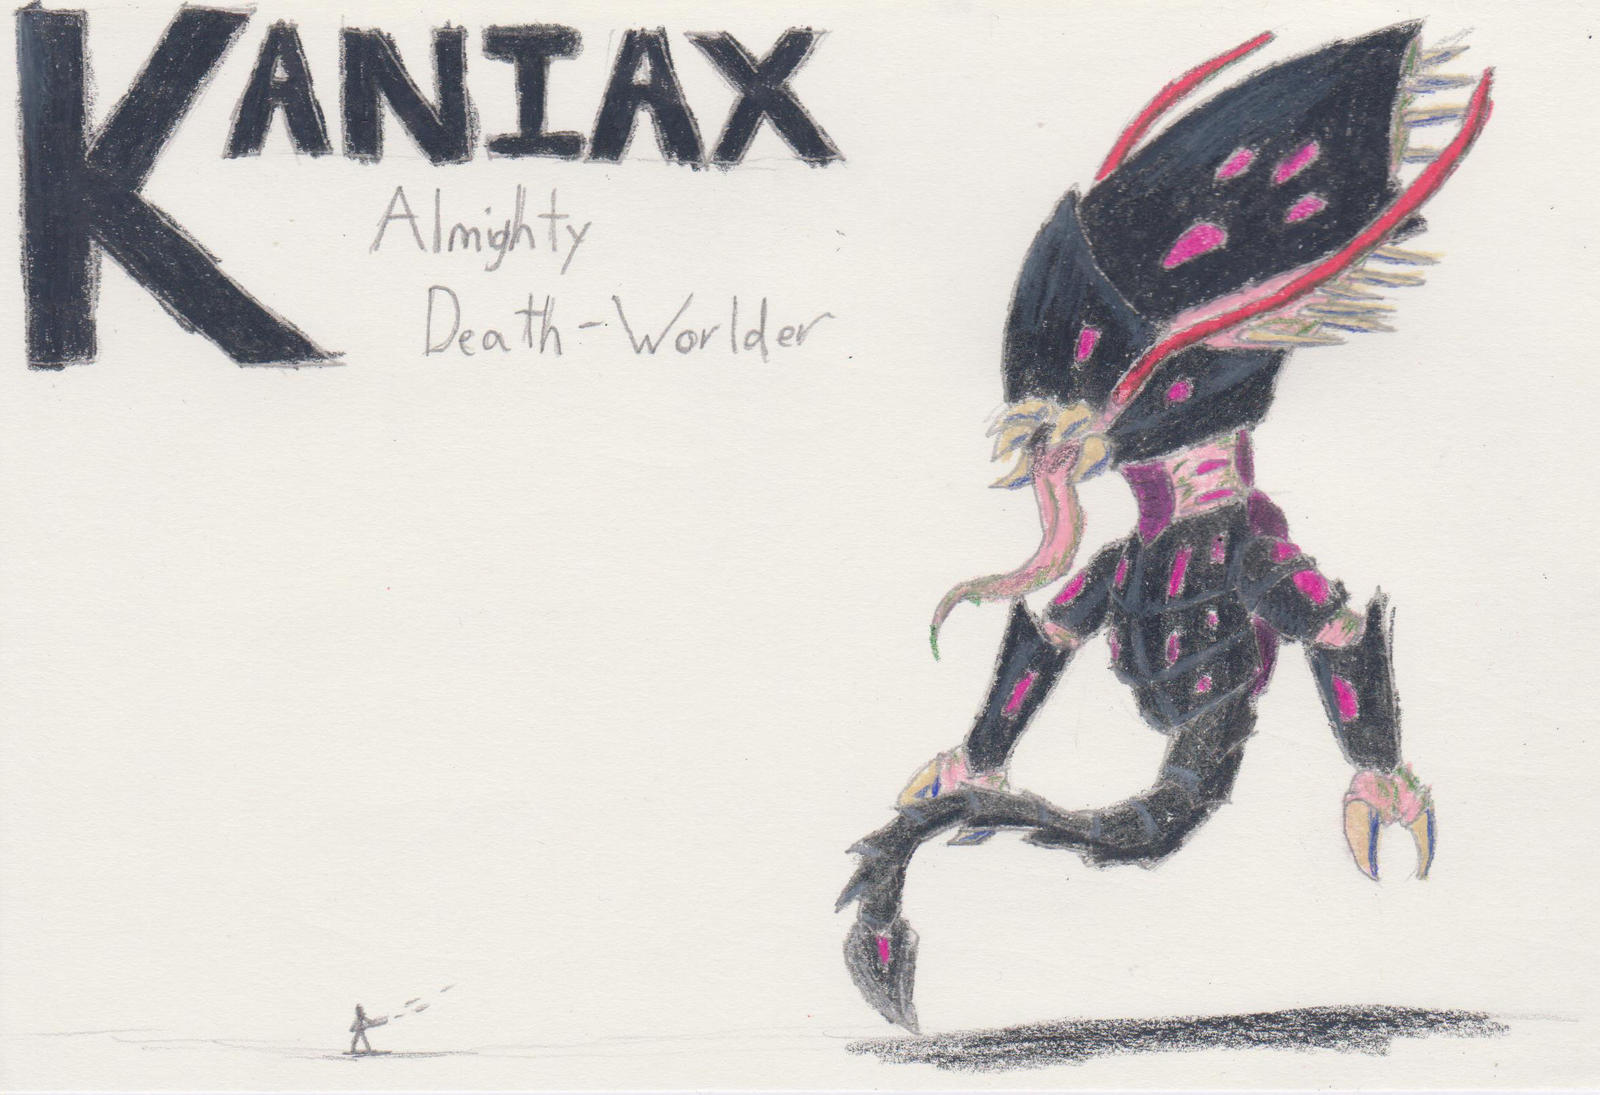 Kaniax, Almighty Death-Worlder